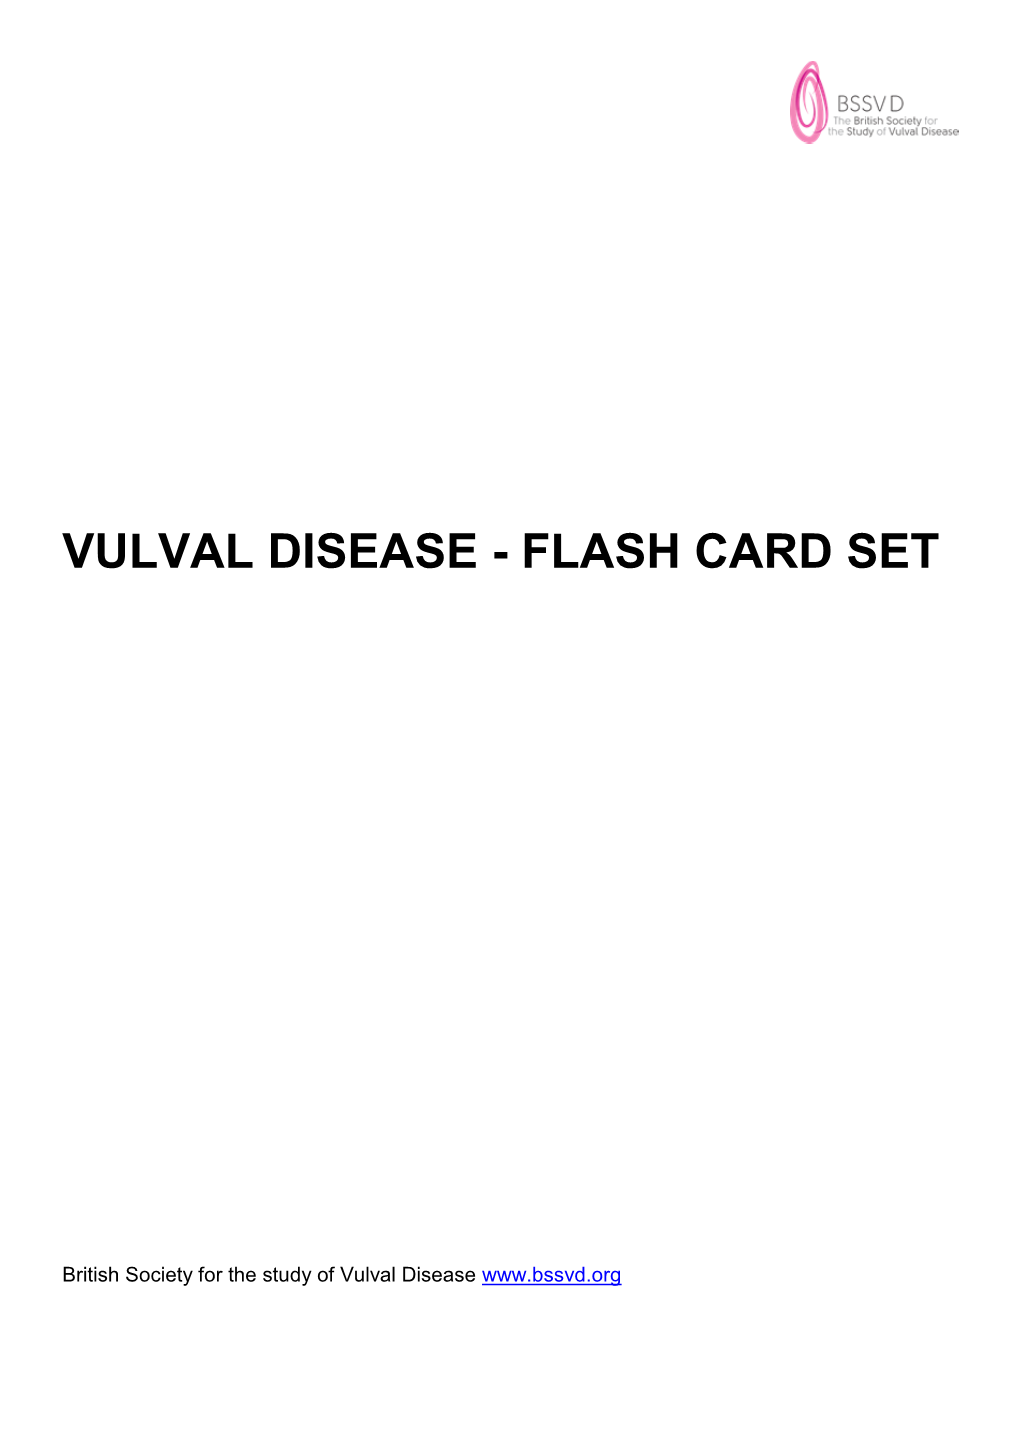 Vulval Disease - Flash Card Set